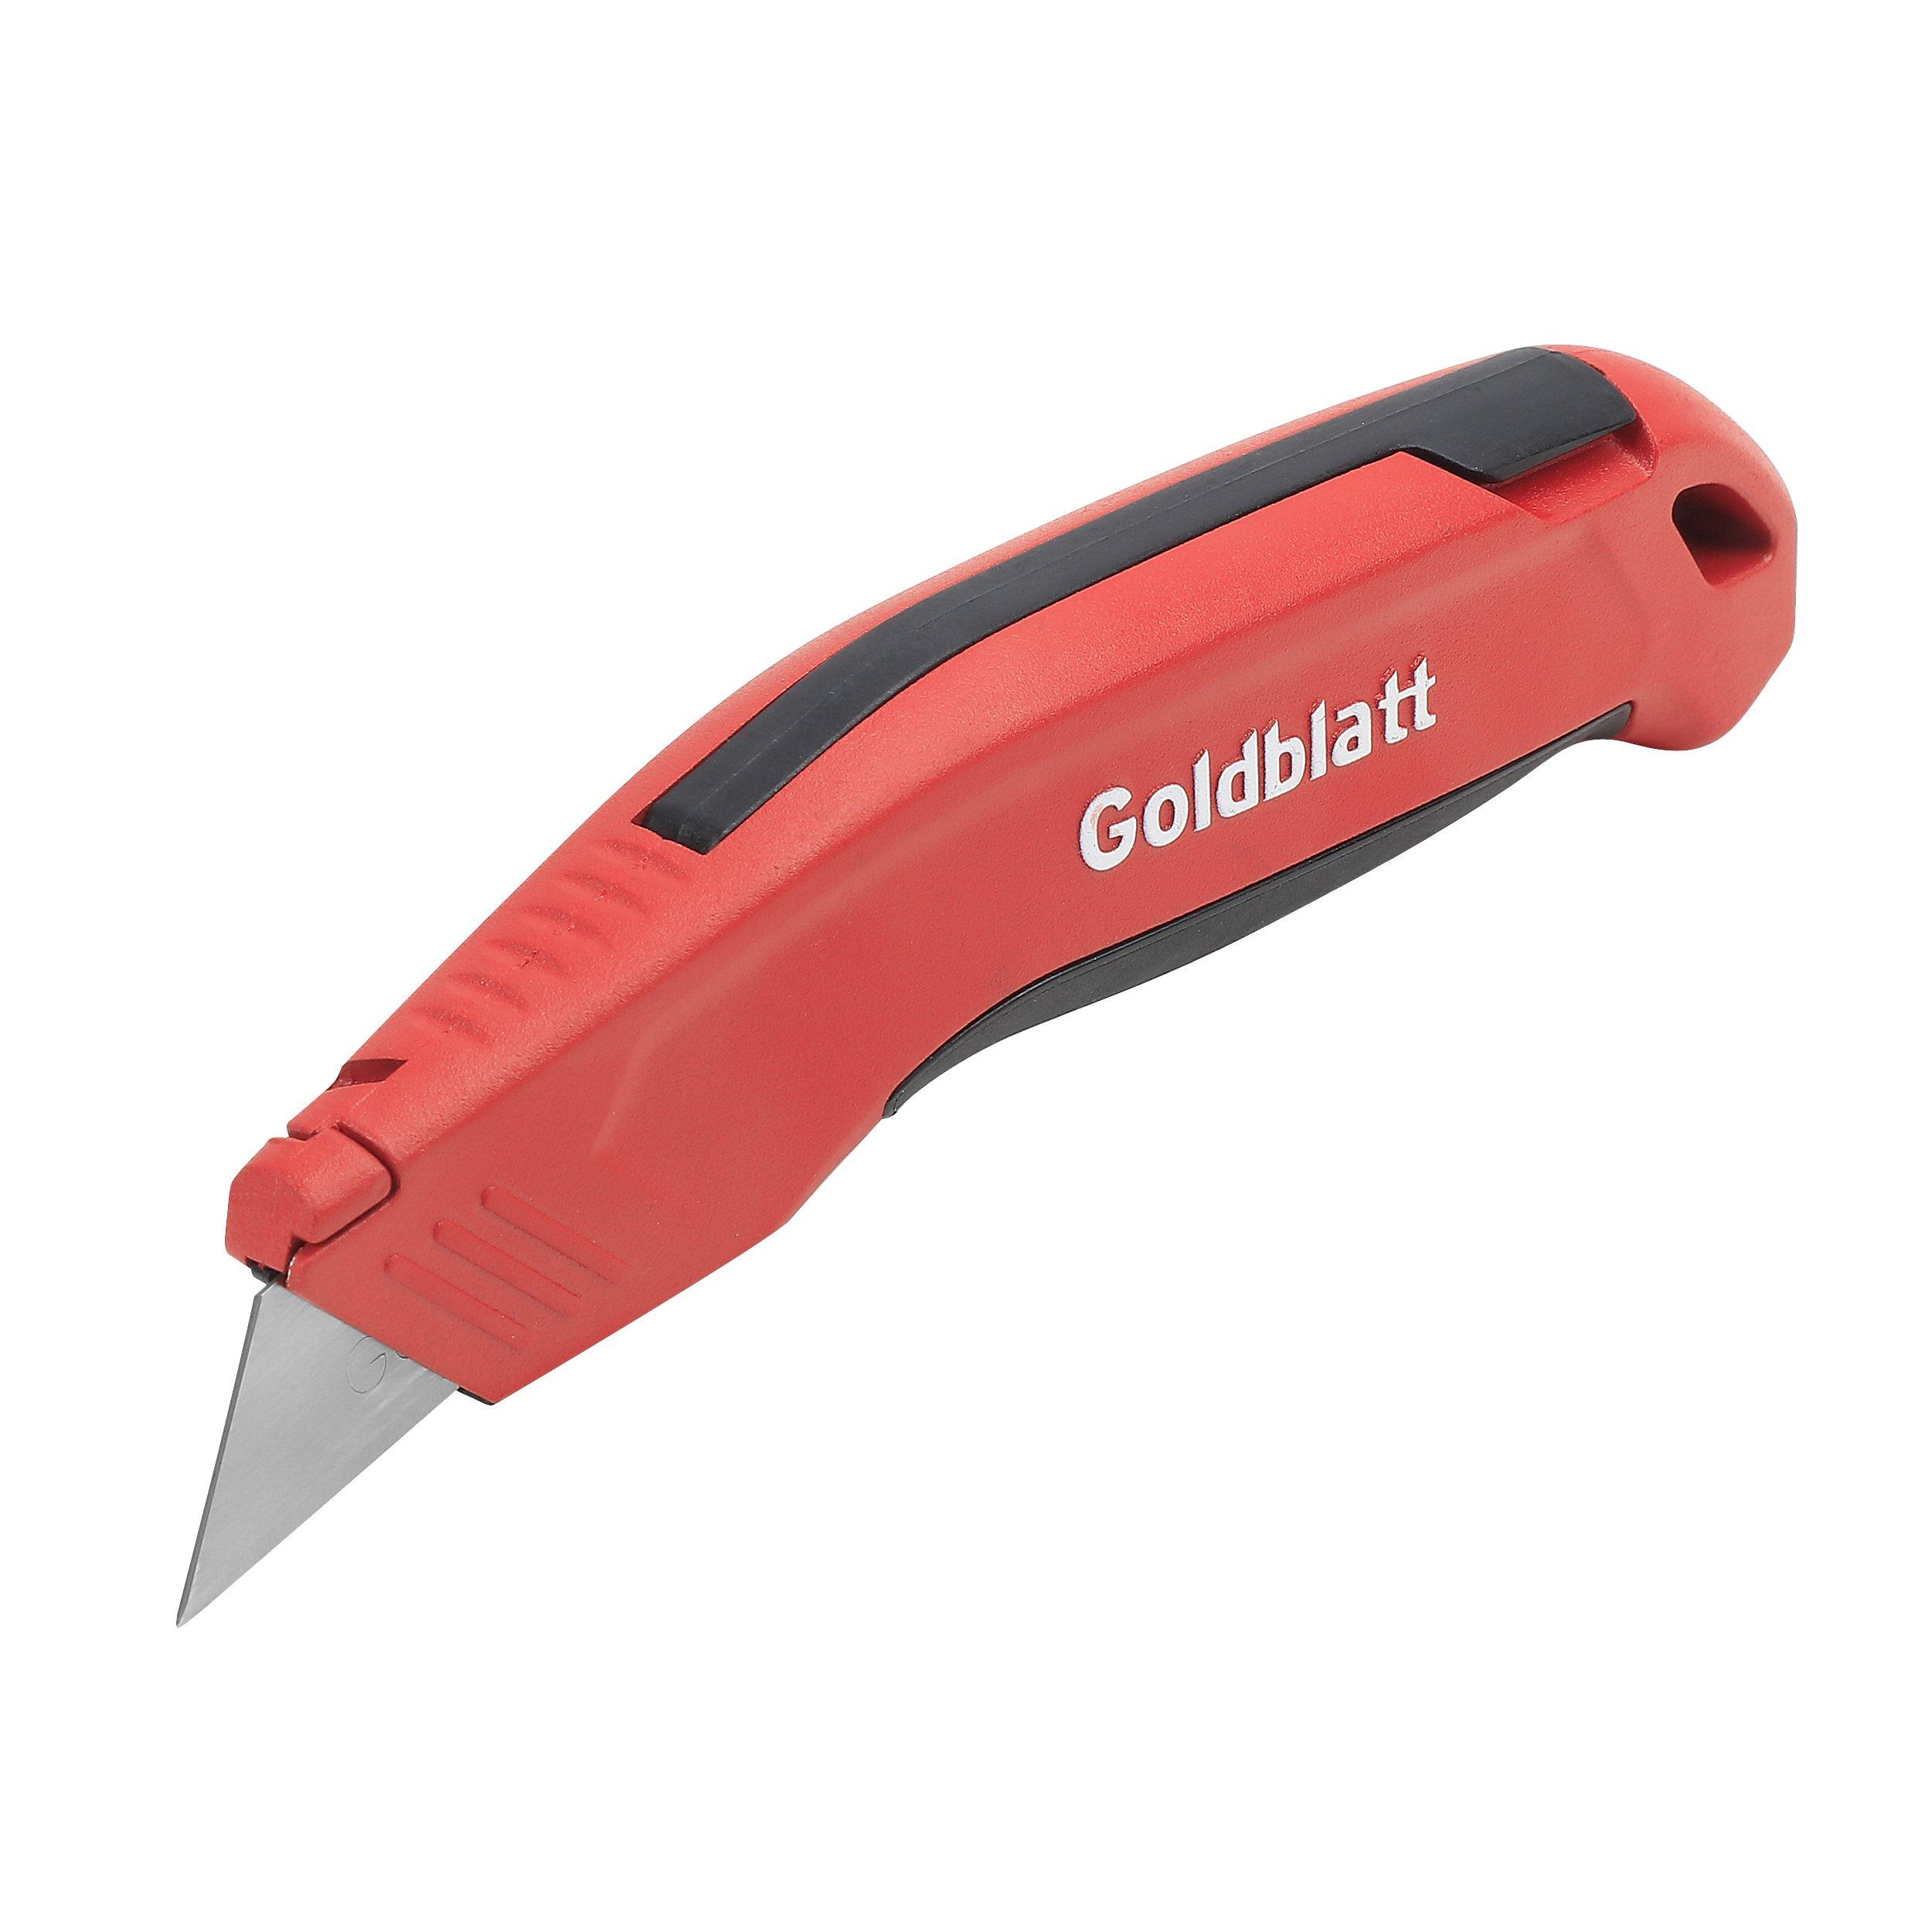 Goldblatt Quick Change Fixed Blade Utility Knife